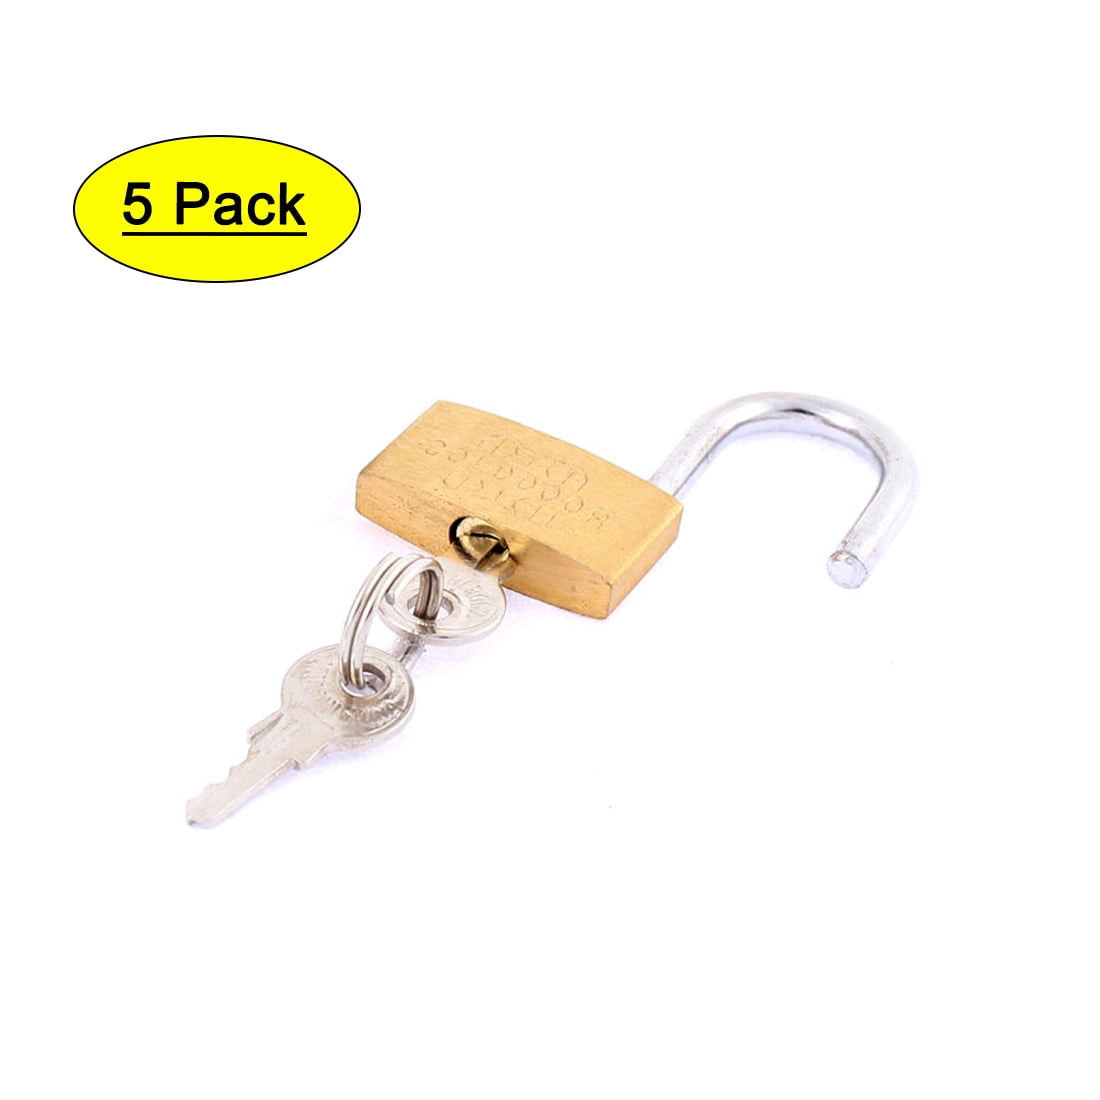 small padlocks with keys